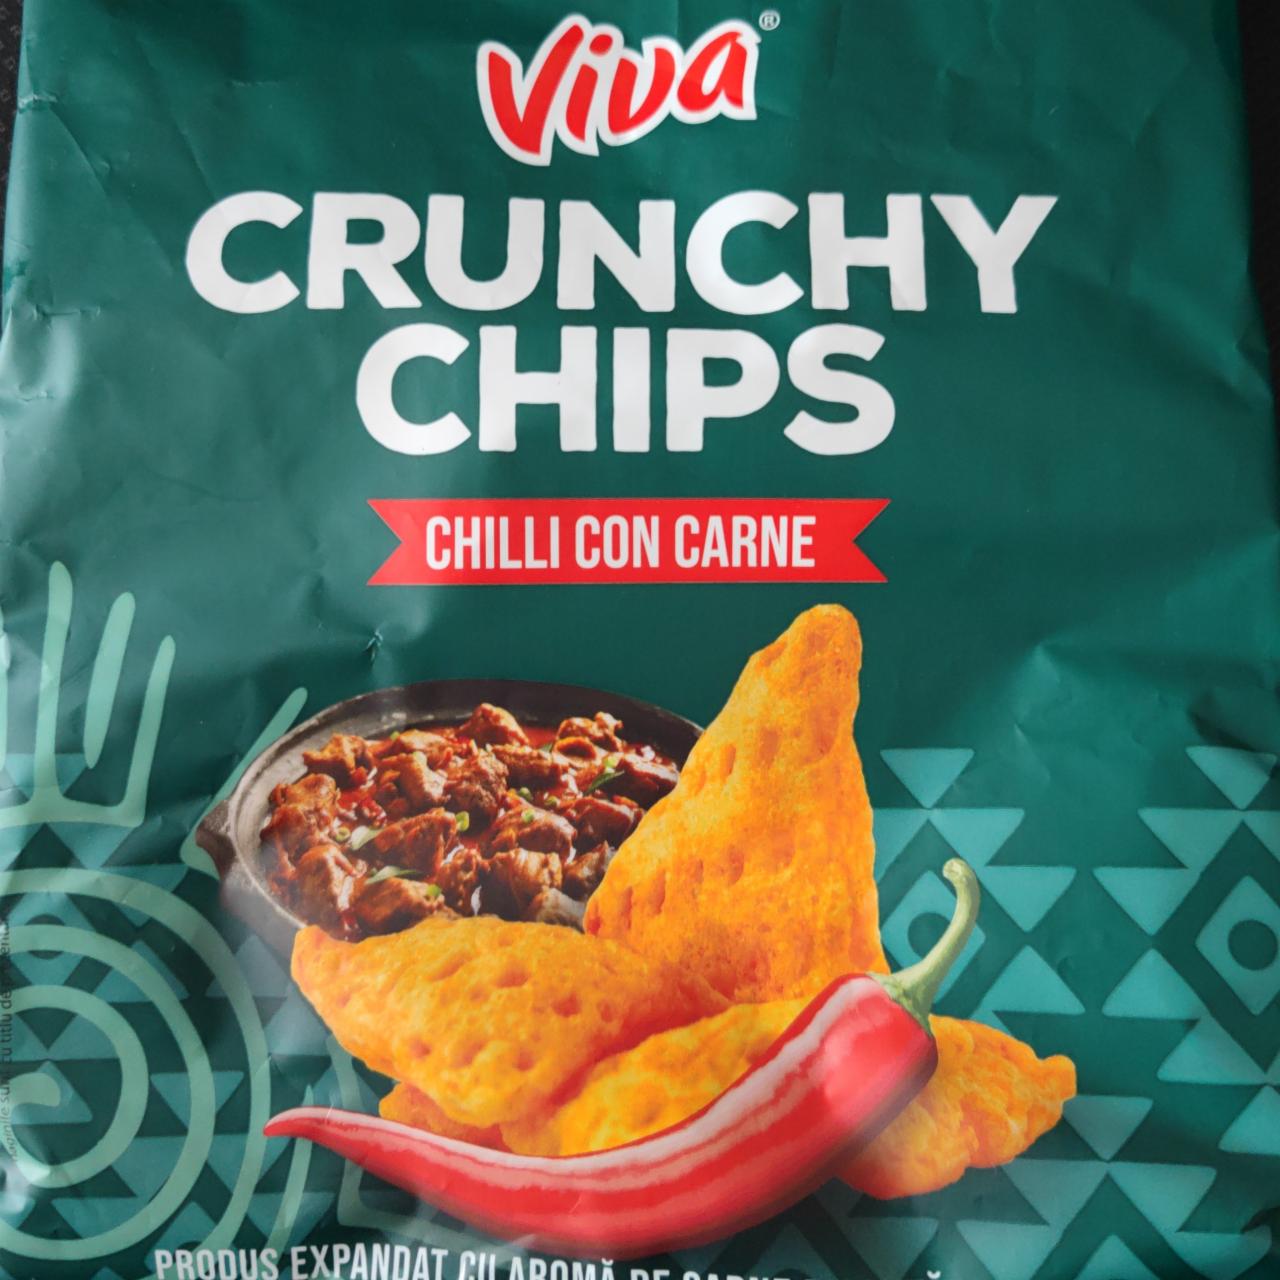 Fotografie - Crunchy chips Chilli con carne Viva